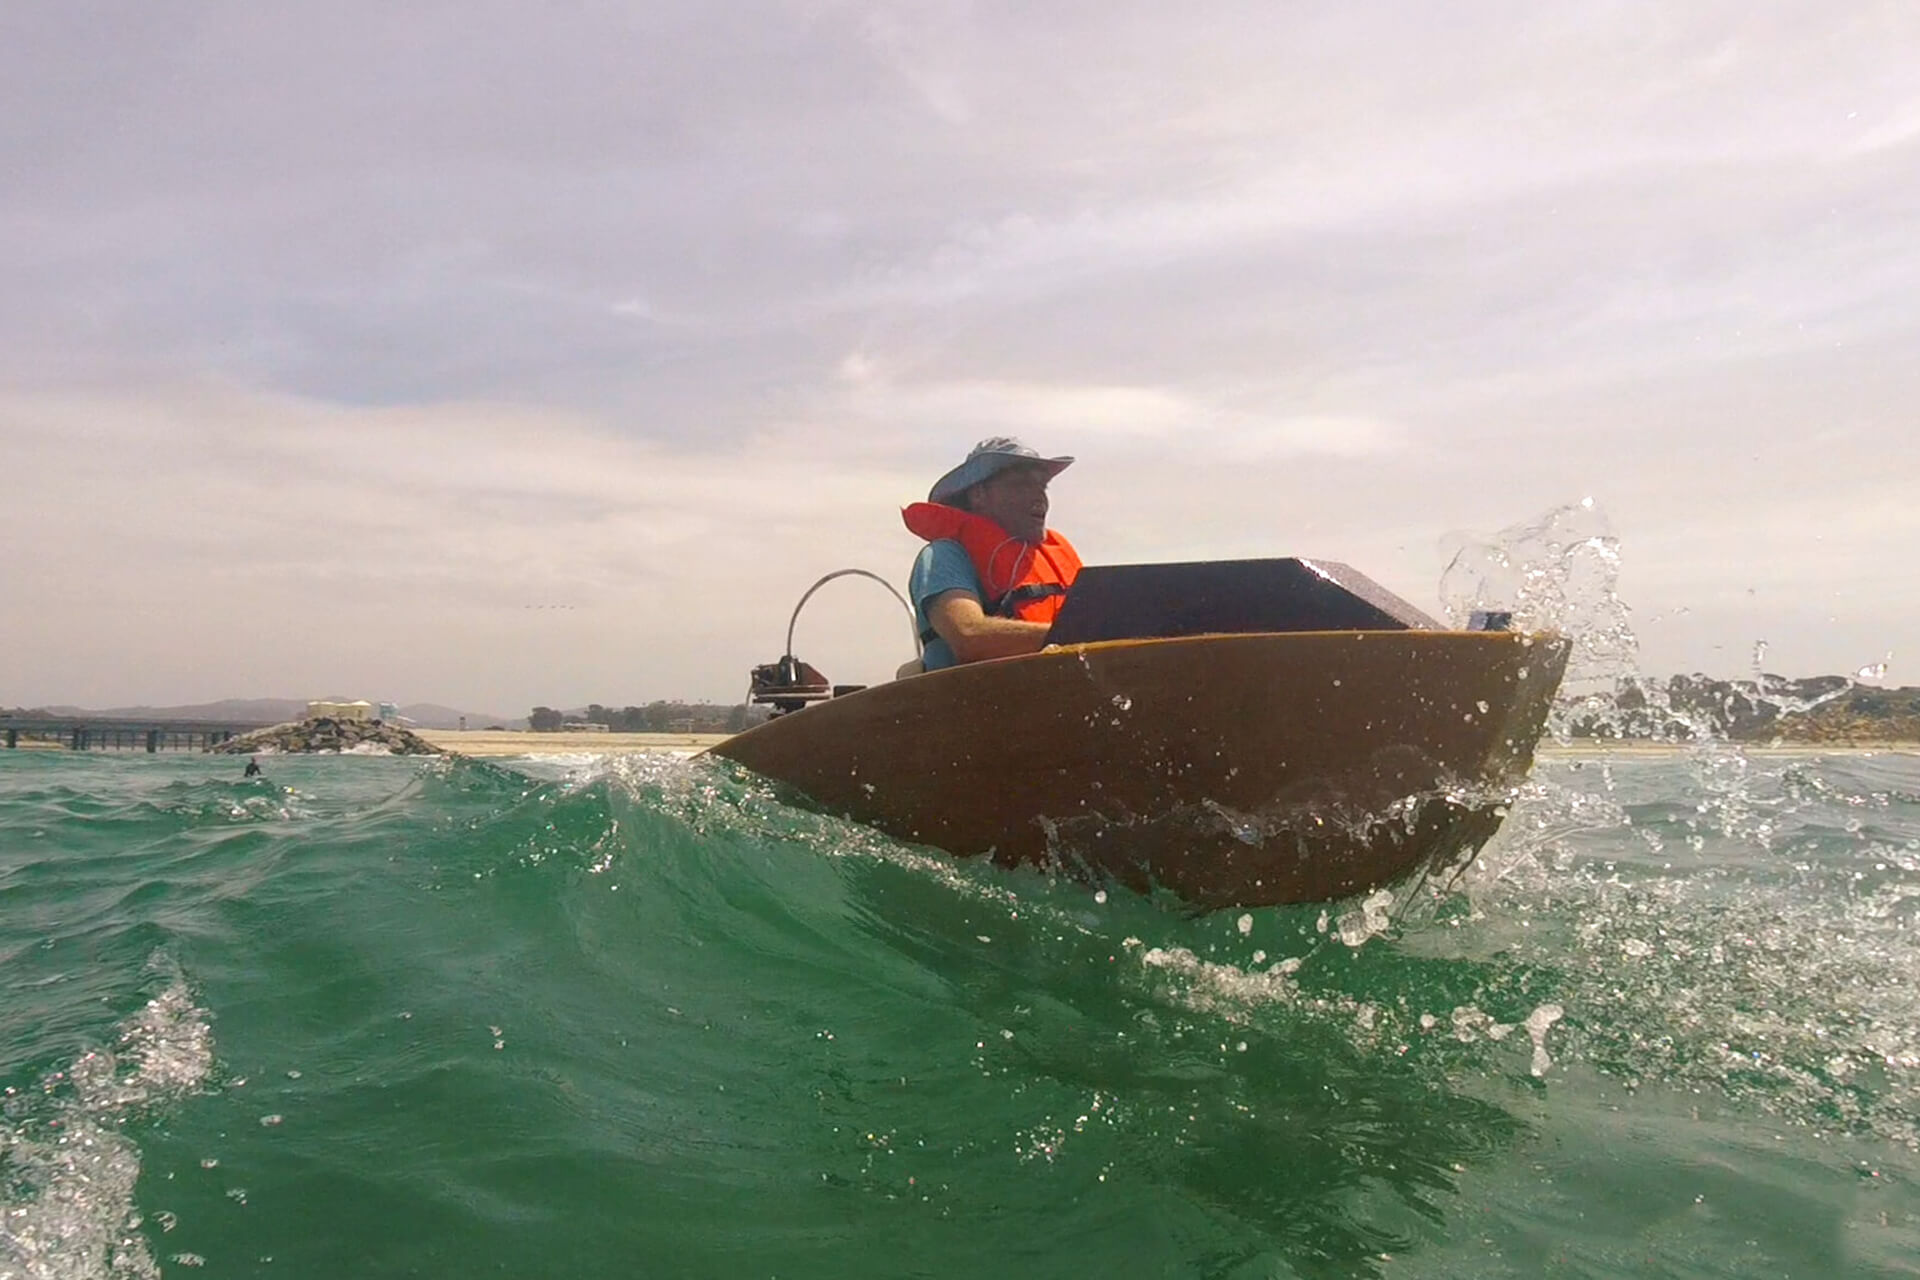 Carl jumping an ocean wave in his mini boat